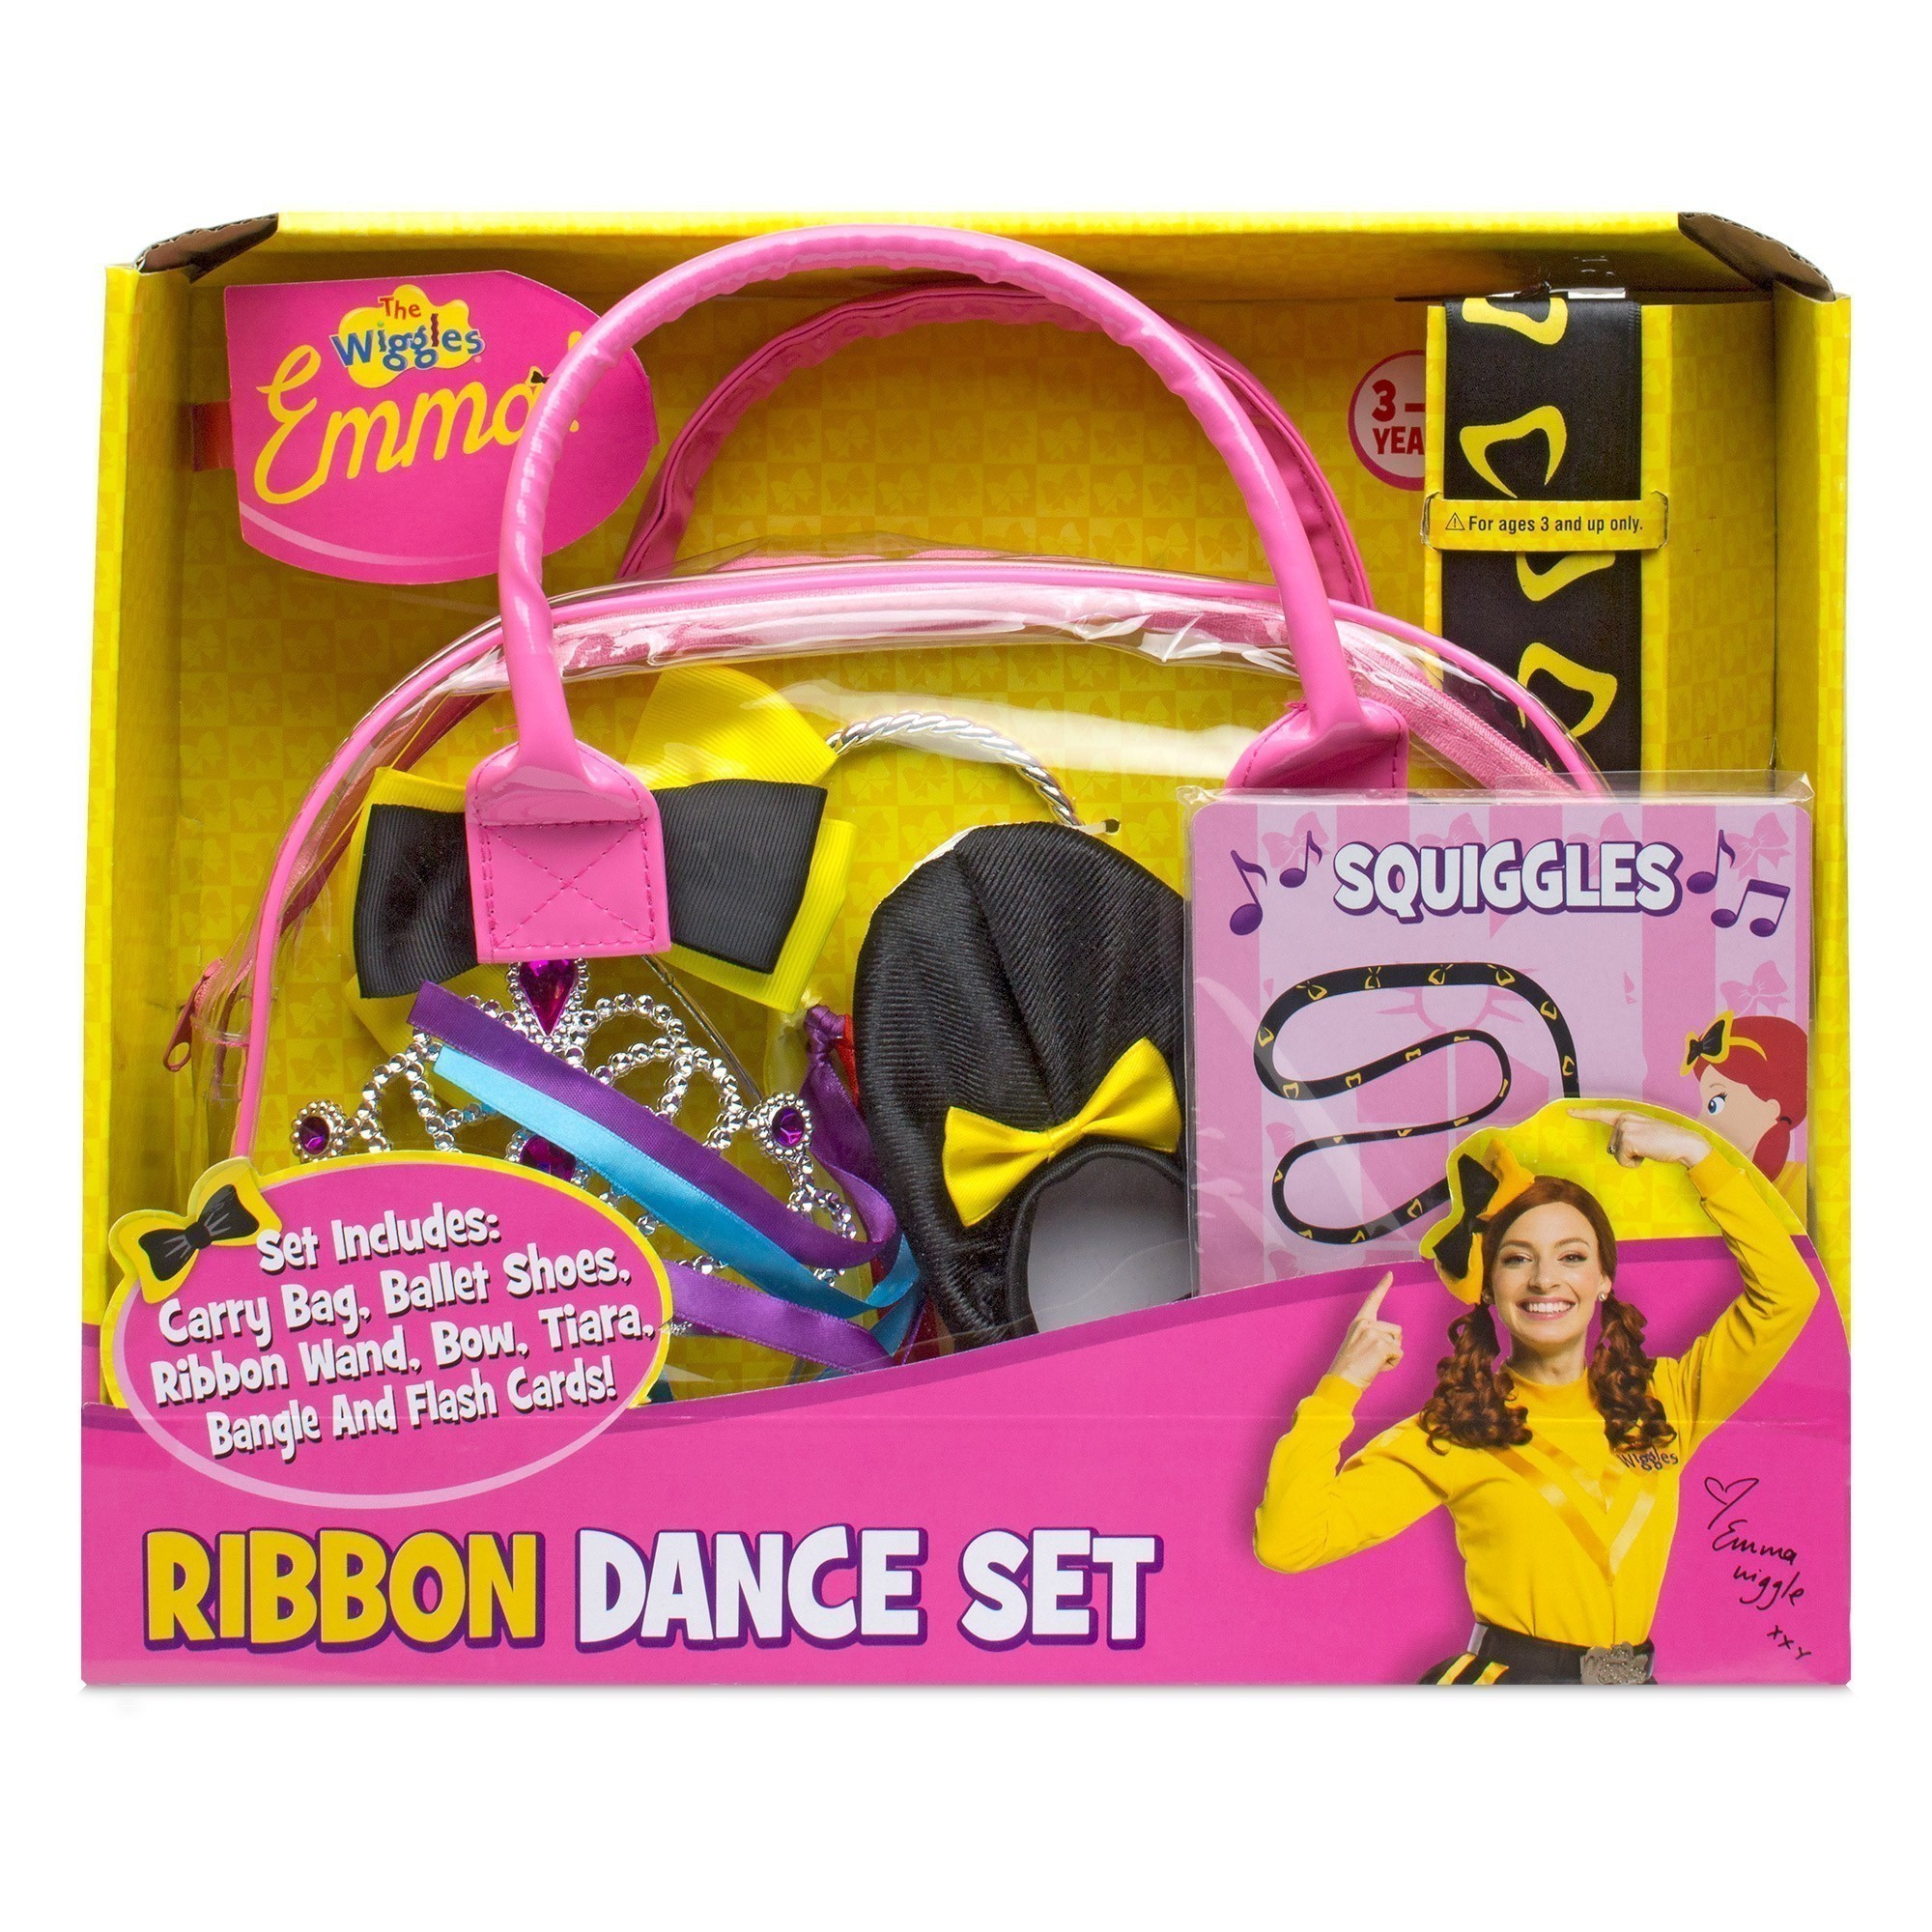 The Wiggles - Emma's Ribbon Dance Set